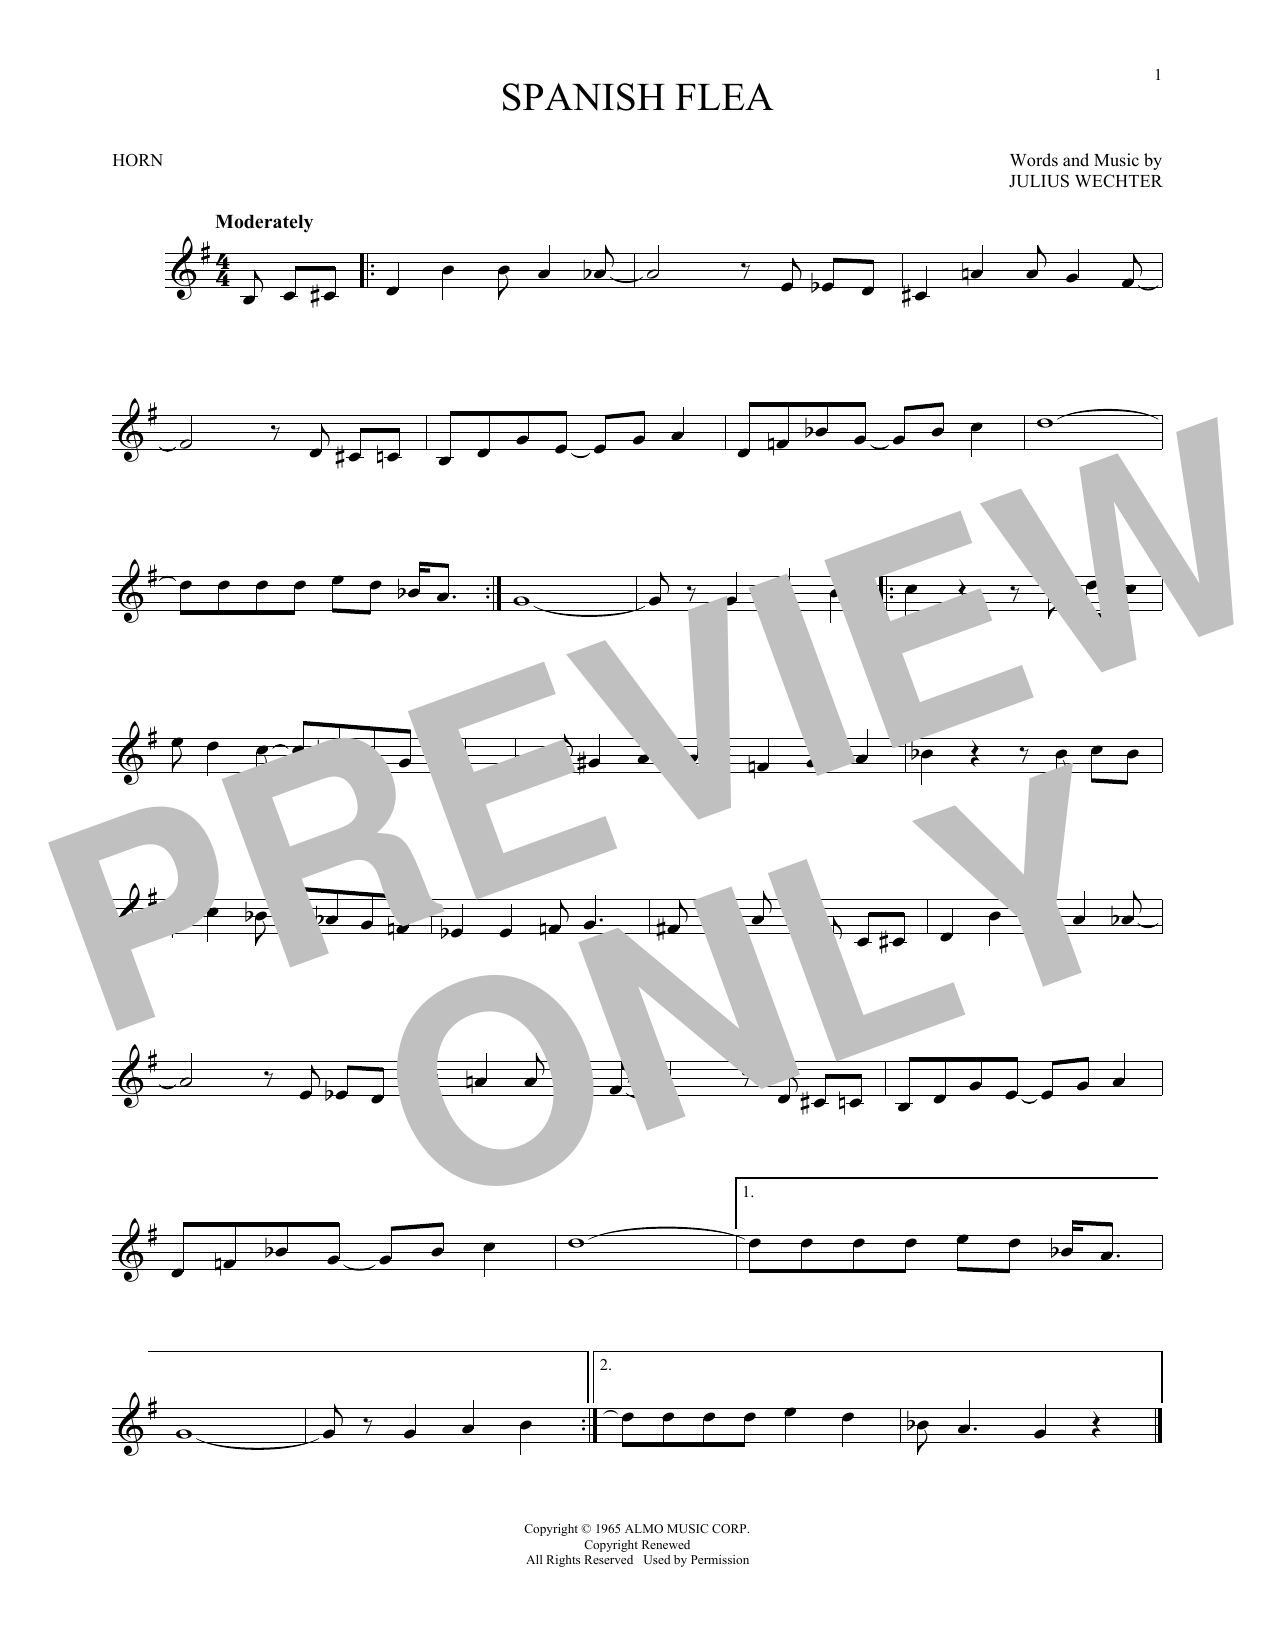 Download Herb Alpert & The Tijuana Brass Spanish Flea Sheet Music and learn how to play Tenor Saxophone PDF digital score in minutes